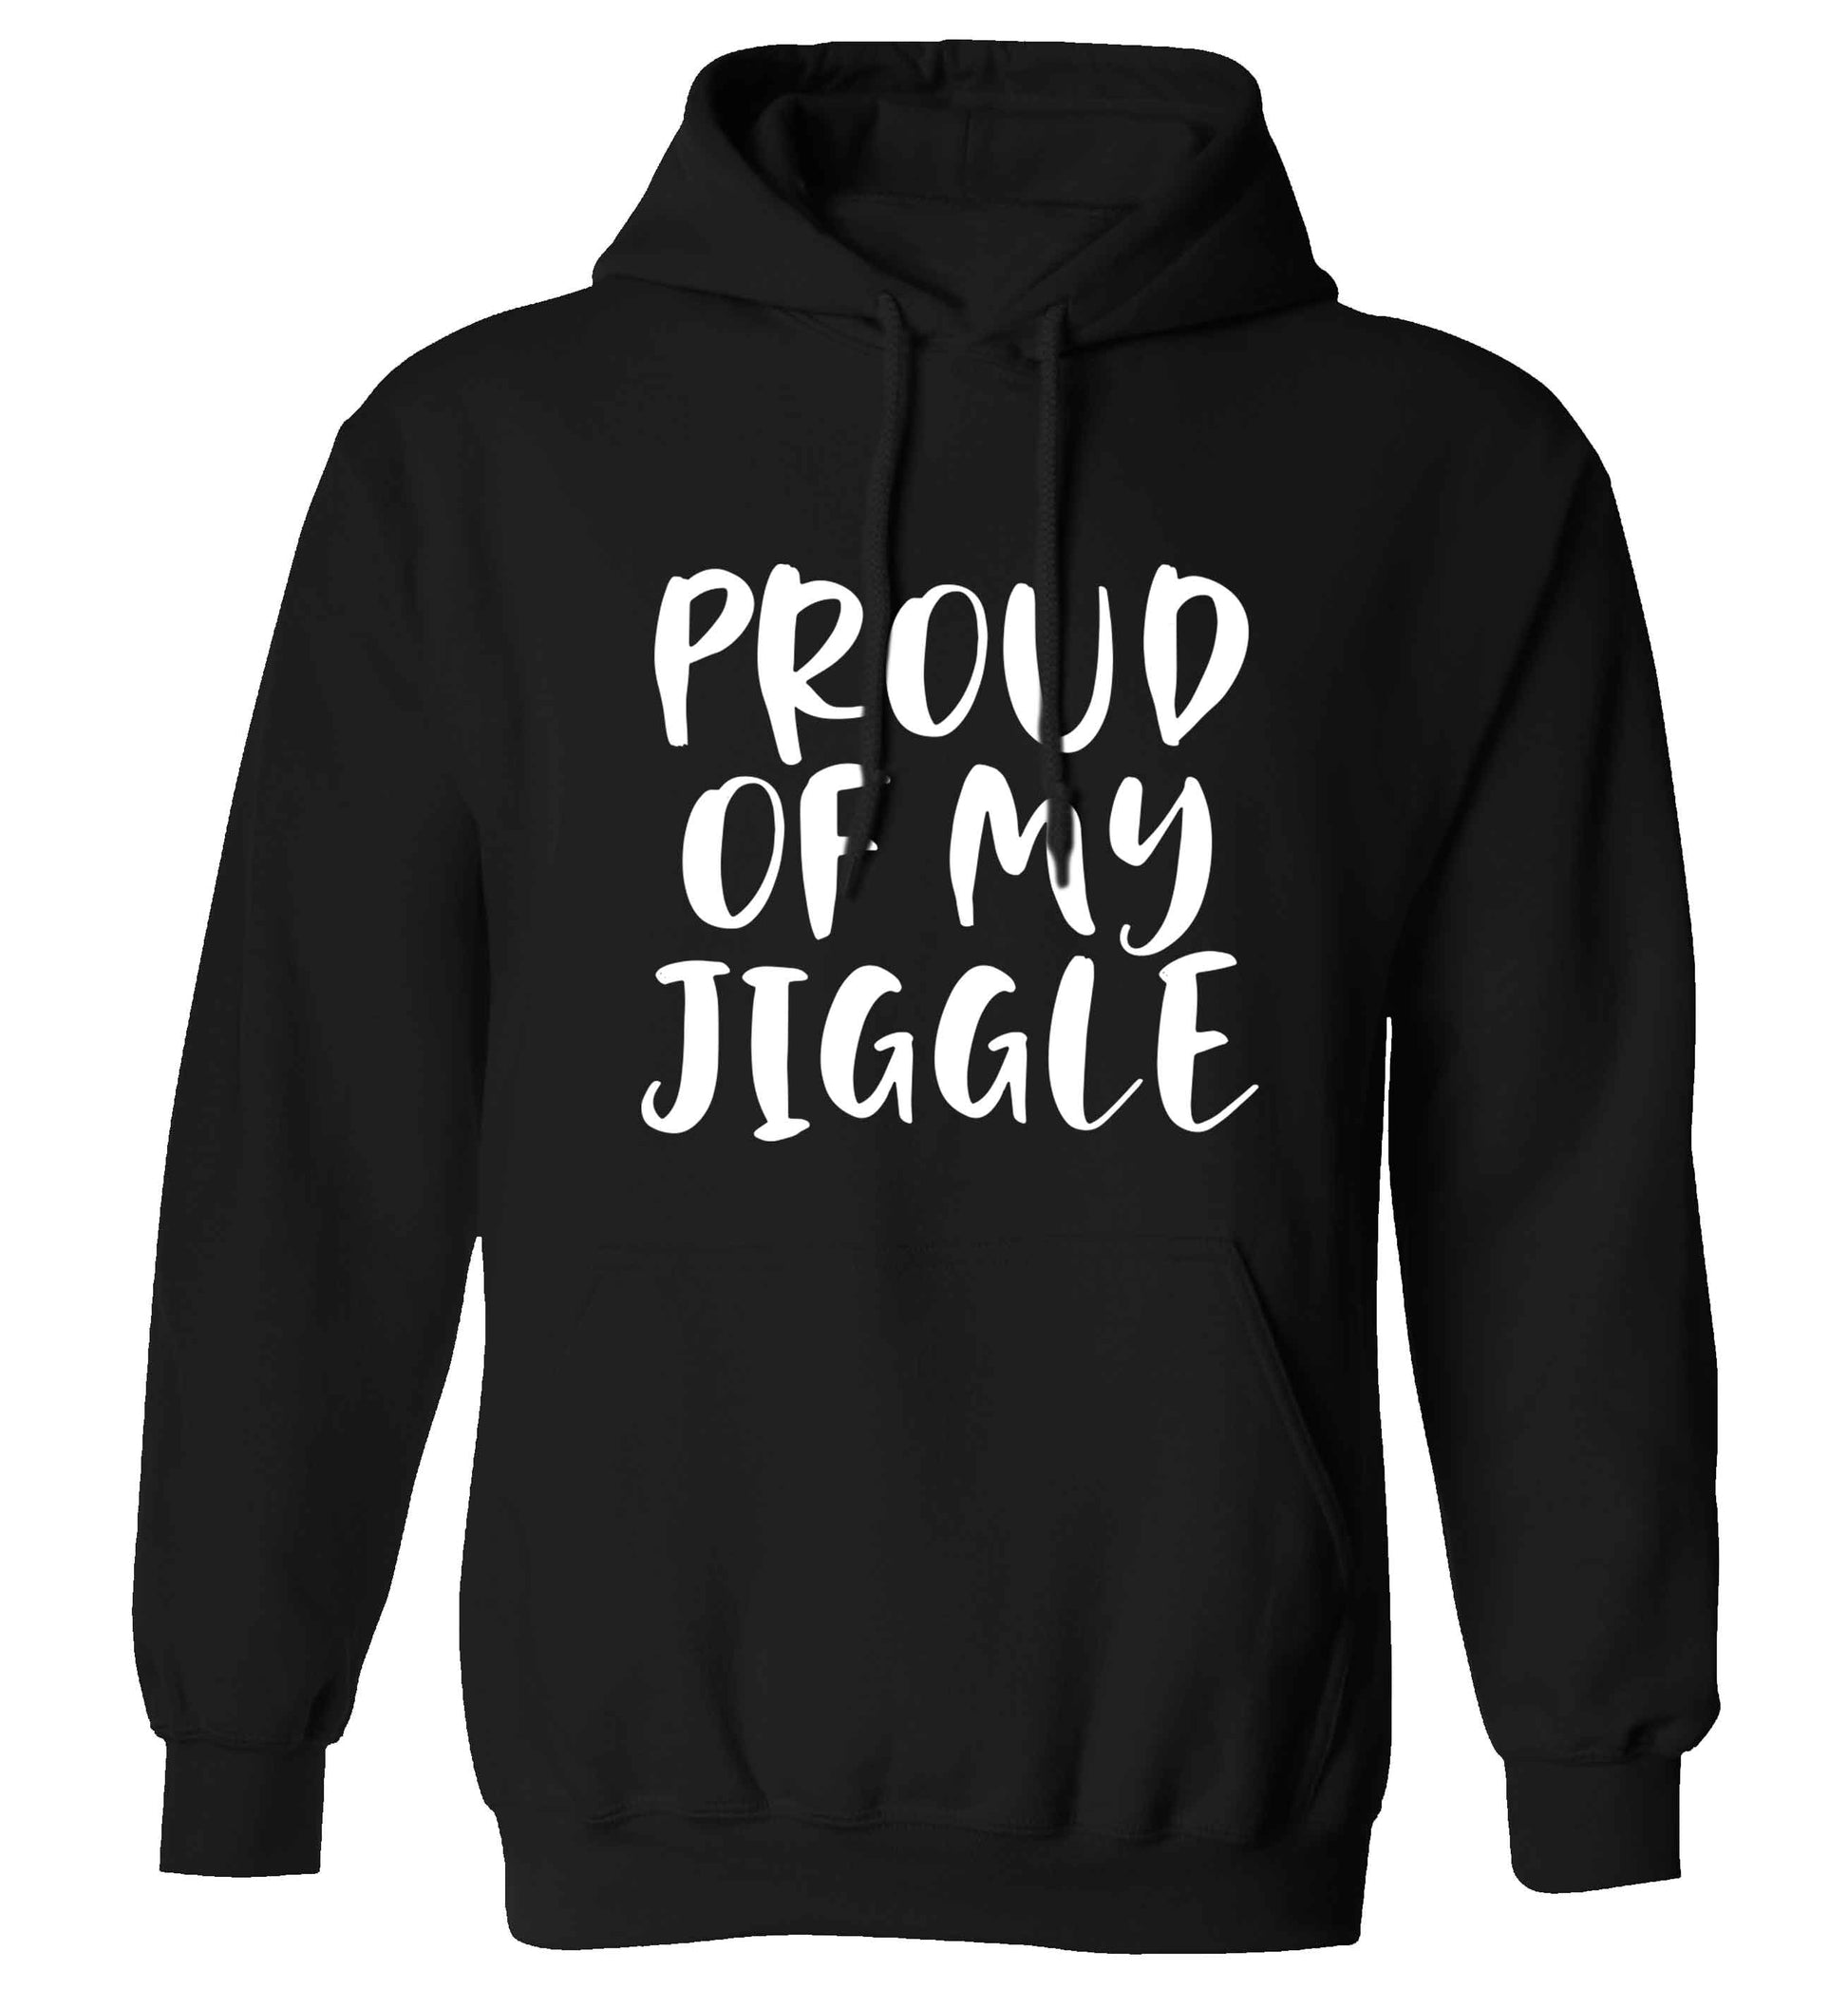 Proud of my jiggle adults unisex black hoodie 2XL